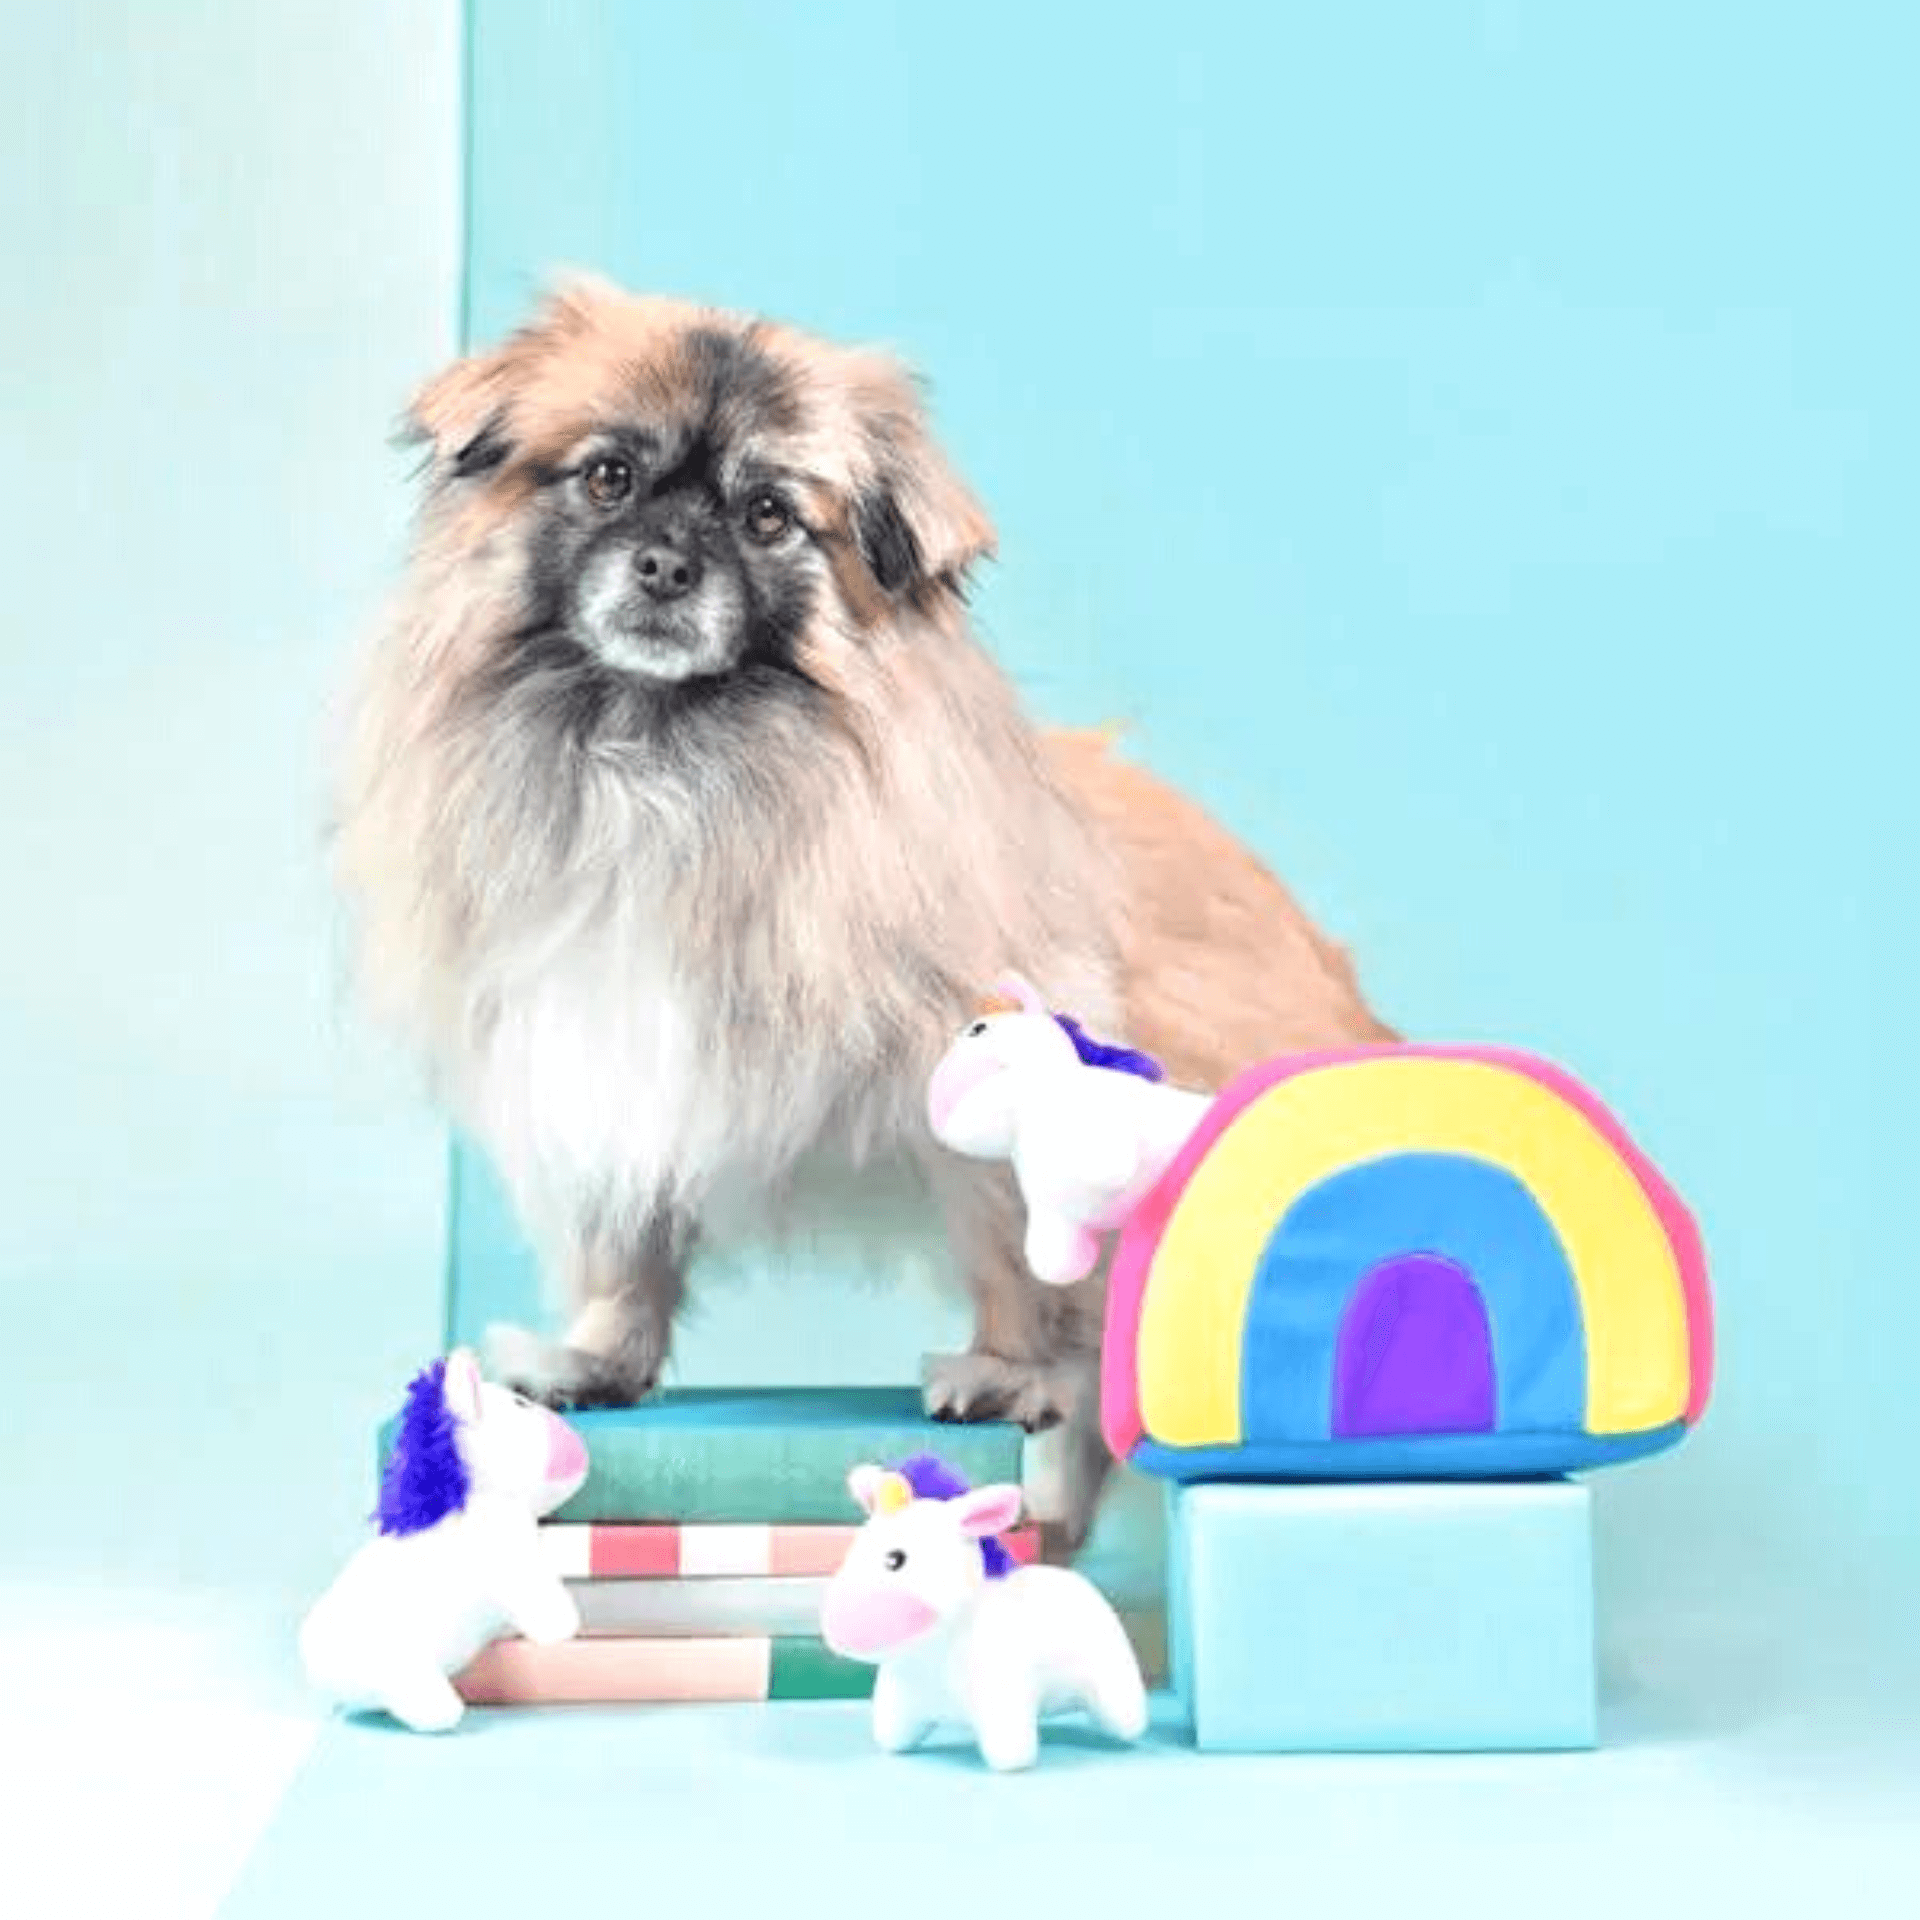 Unicorn Rainbow Dog toy burrow, interactive, fun, squeaky